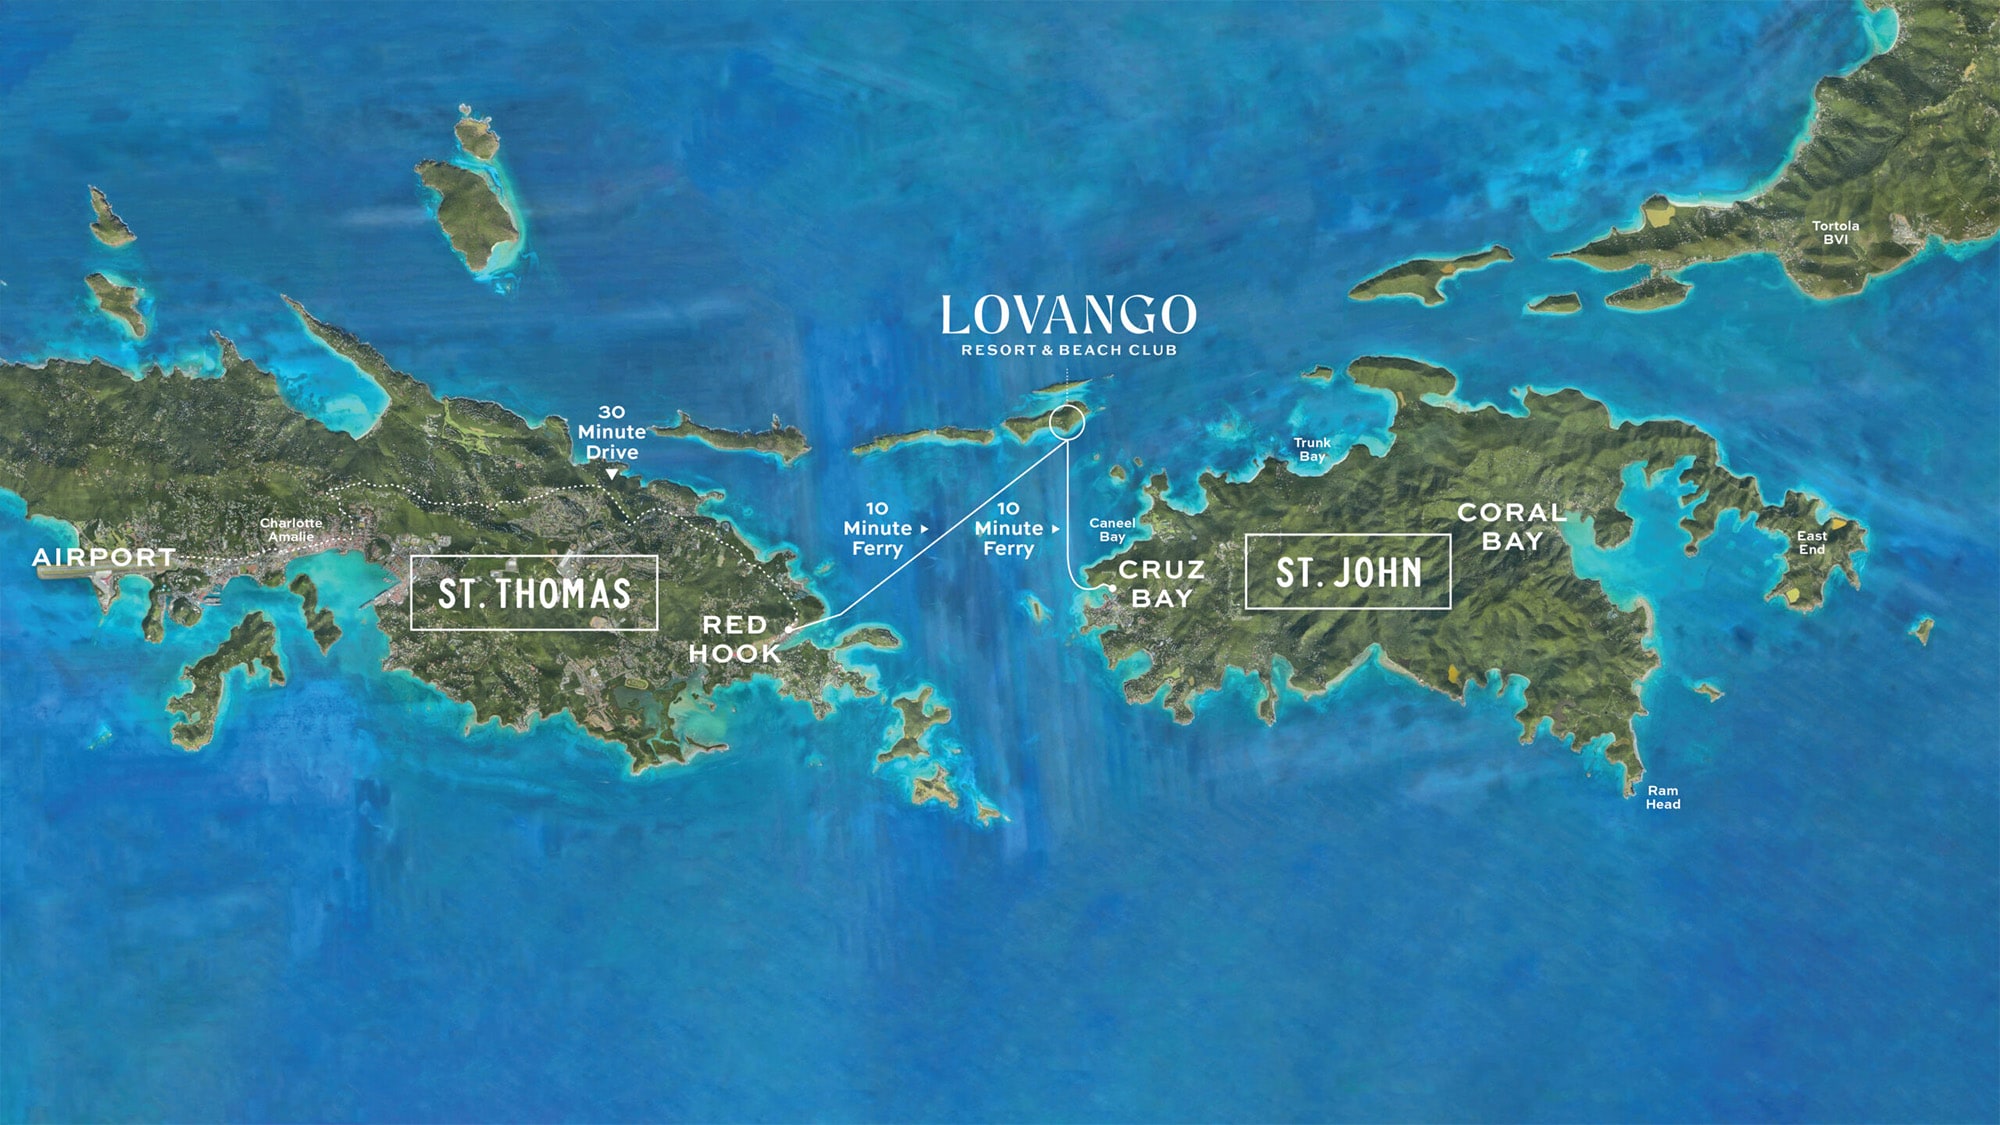 Lovango Bay Virgin Islands Destination - map of the US Virgin Islands and Lovango